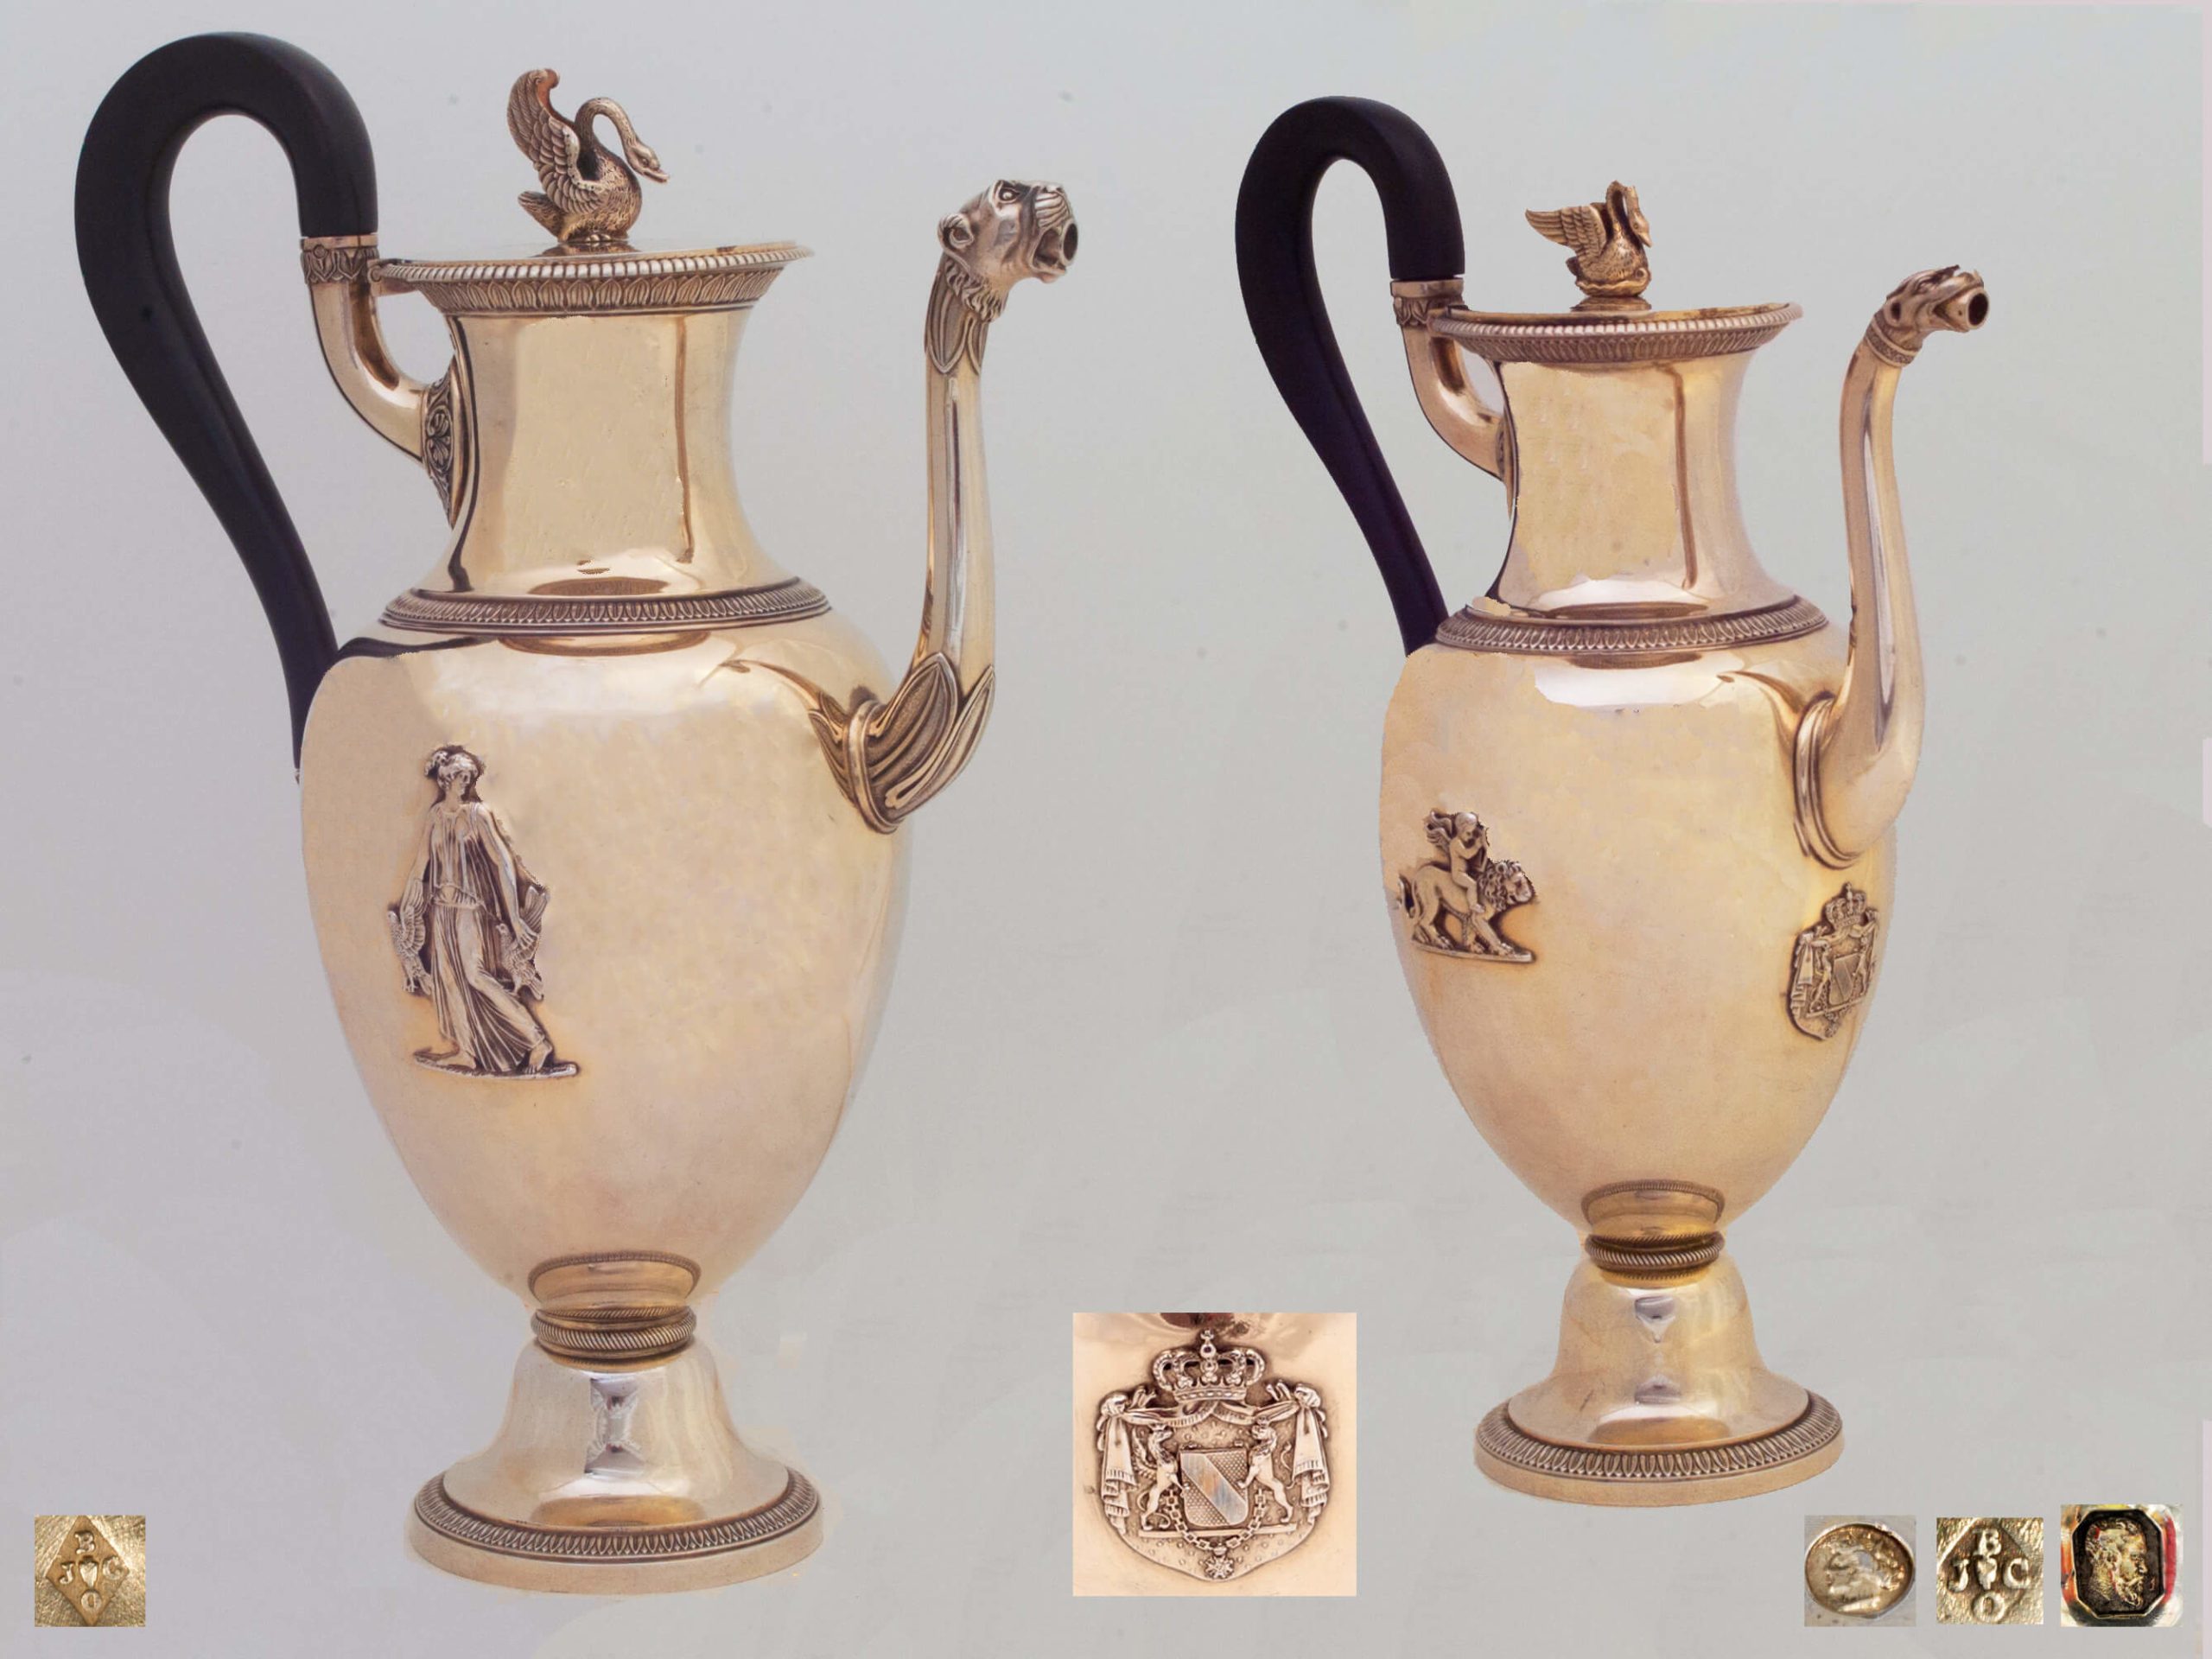 French Empire silver-gilt coffee-pots